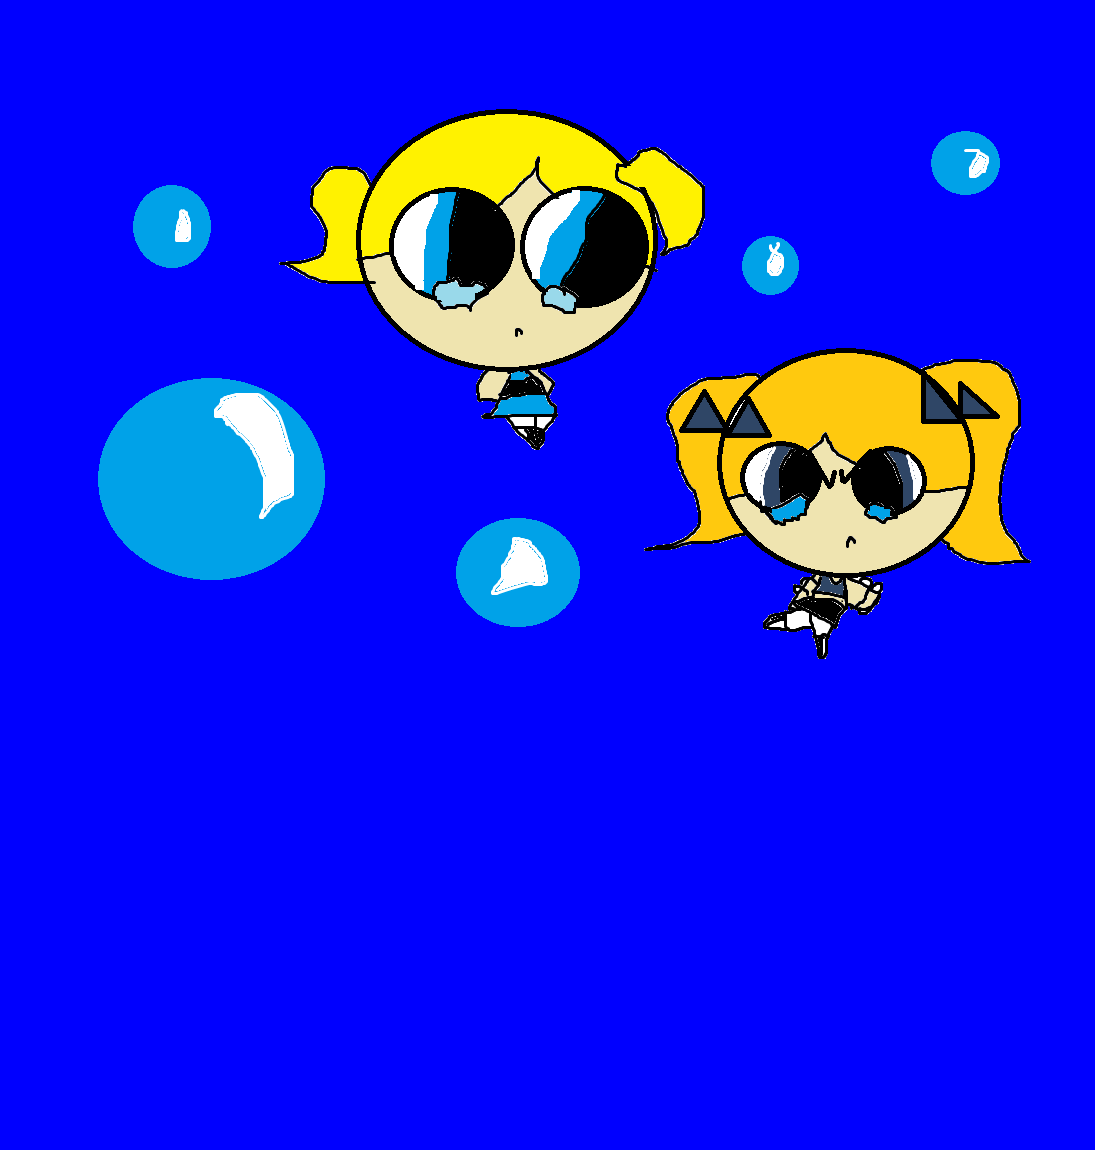 Bubbles and brat